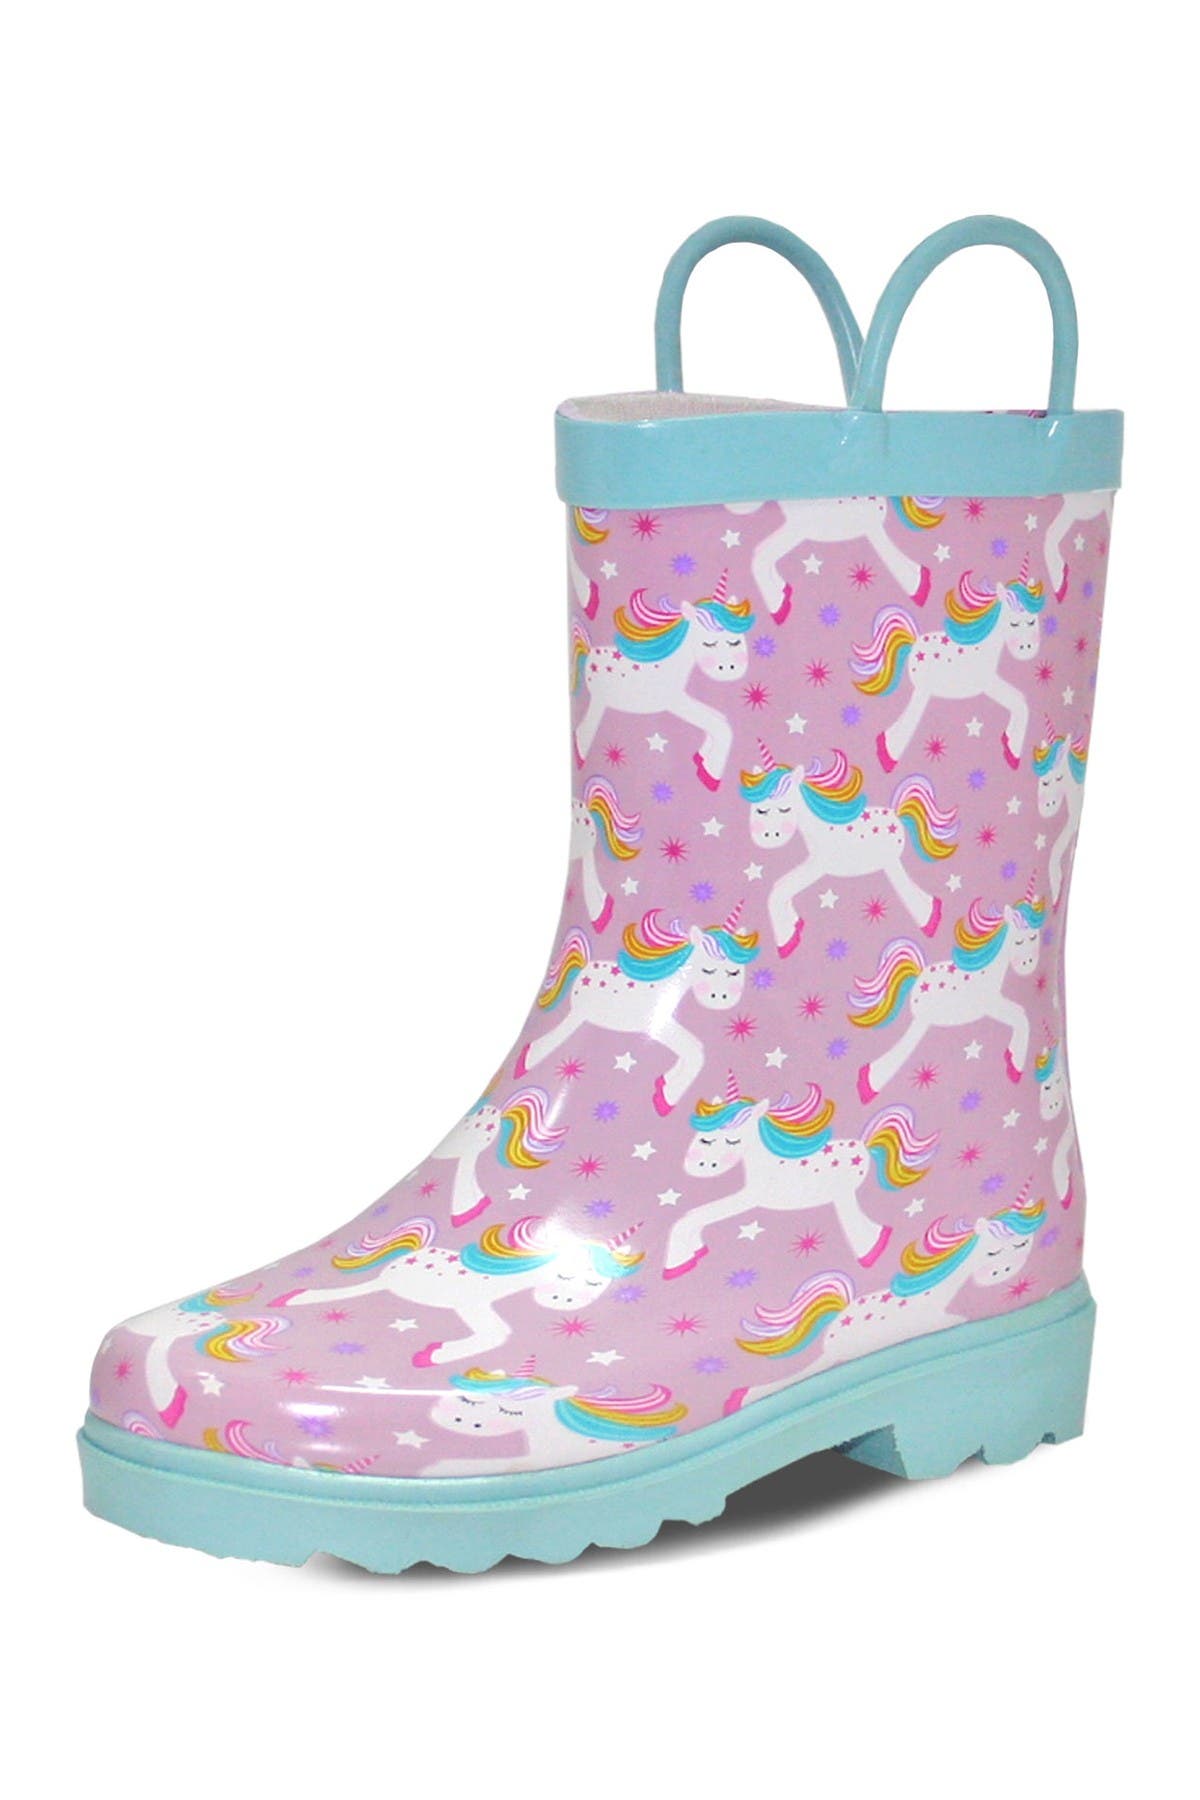 Nomad Footwear Splashy Kids Rain Boot In Magical Unicorns